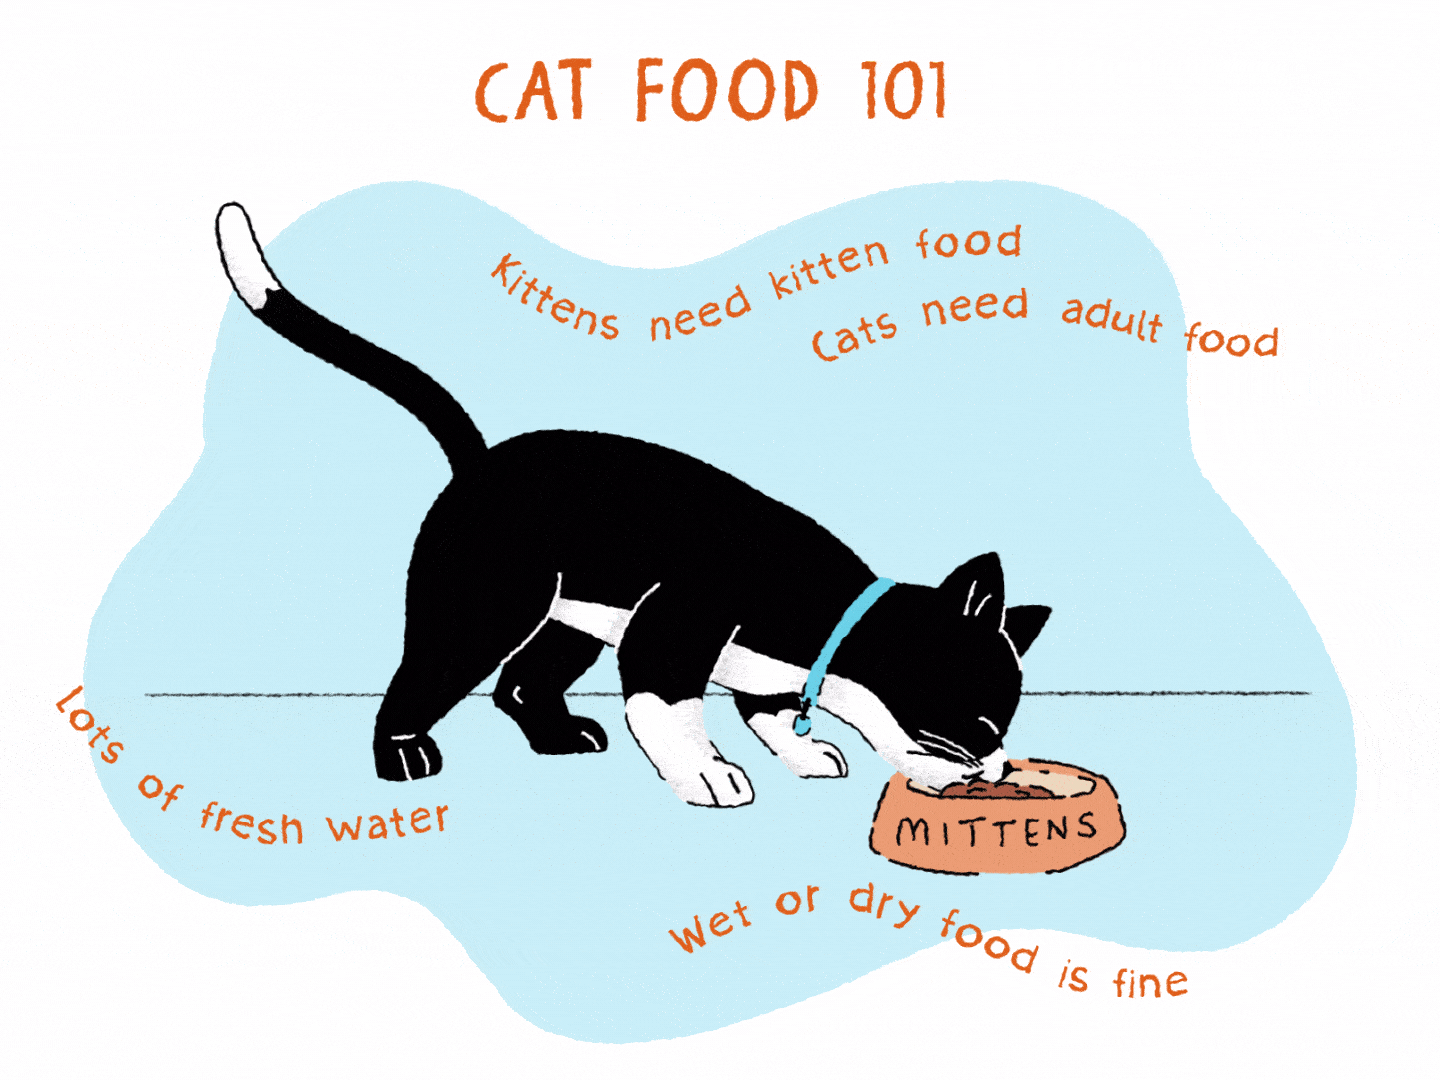 https://www.banfield.com/-/media/Project/Banfield/Main/en/Wellness_at_Banfield/kitten_hub/picking_a_food_for_cats/black-cat-eats-bowl-illustration.gif?h=1080&w=1440&rev=66d7ed3999264662baacb614f789bcb0&hash=FA860DB758C3FC1CC9010E4C2913FCF4